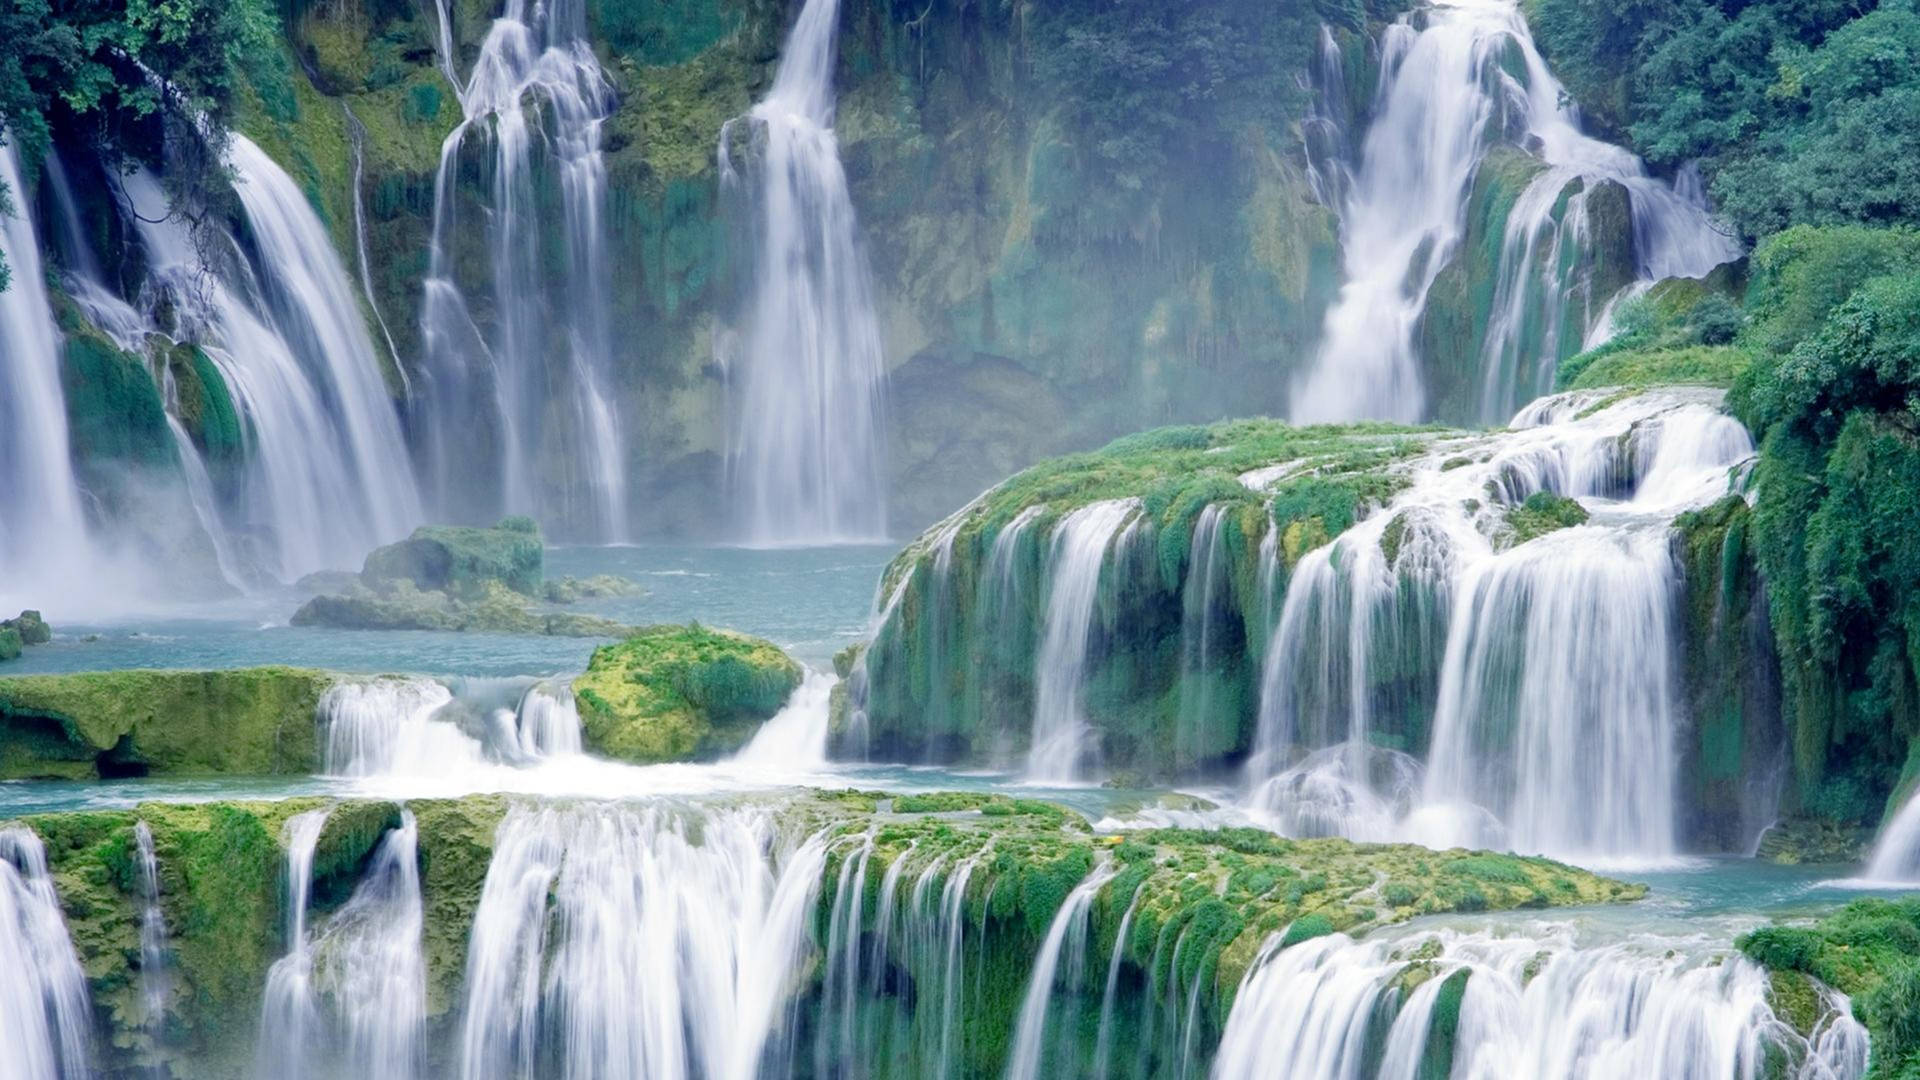 Hd Waterfall Of Vietnam's Ban Gioc Water Falls Wallpaper